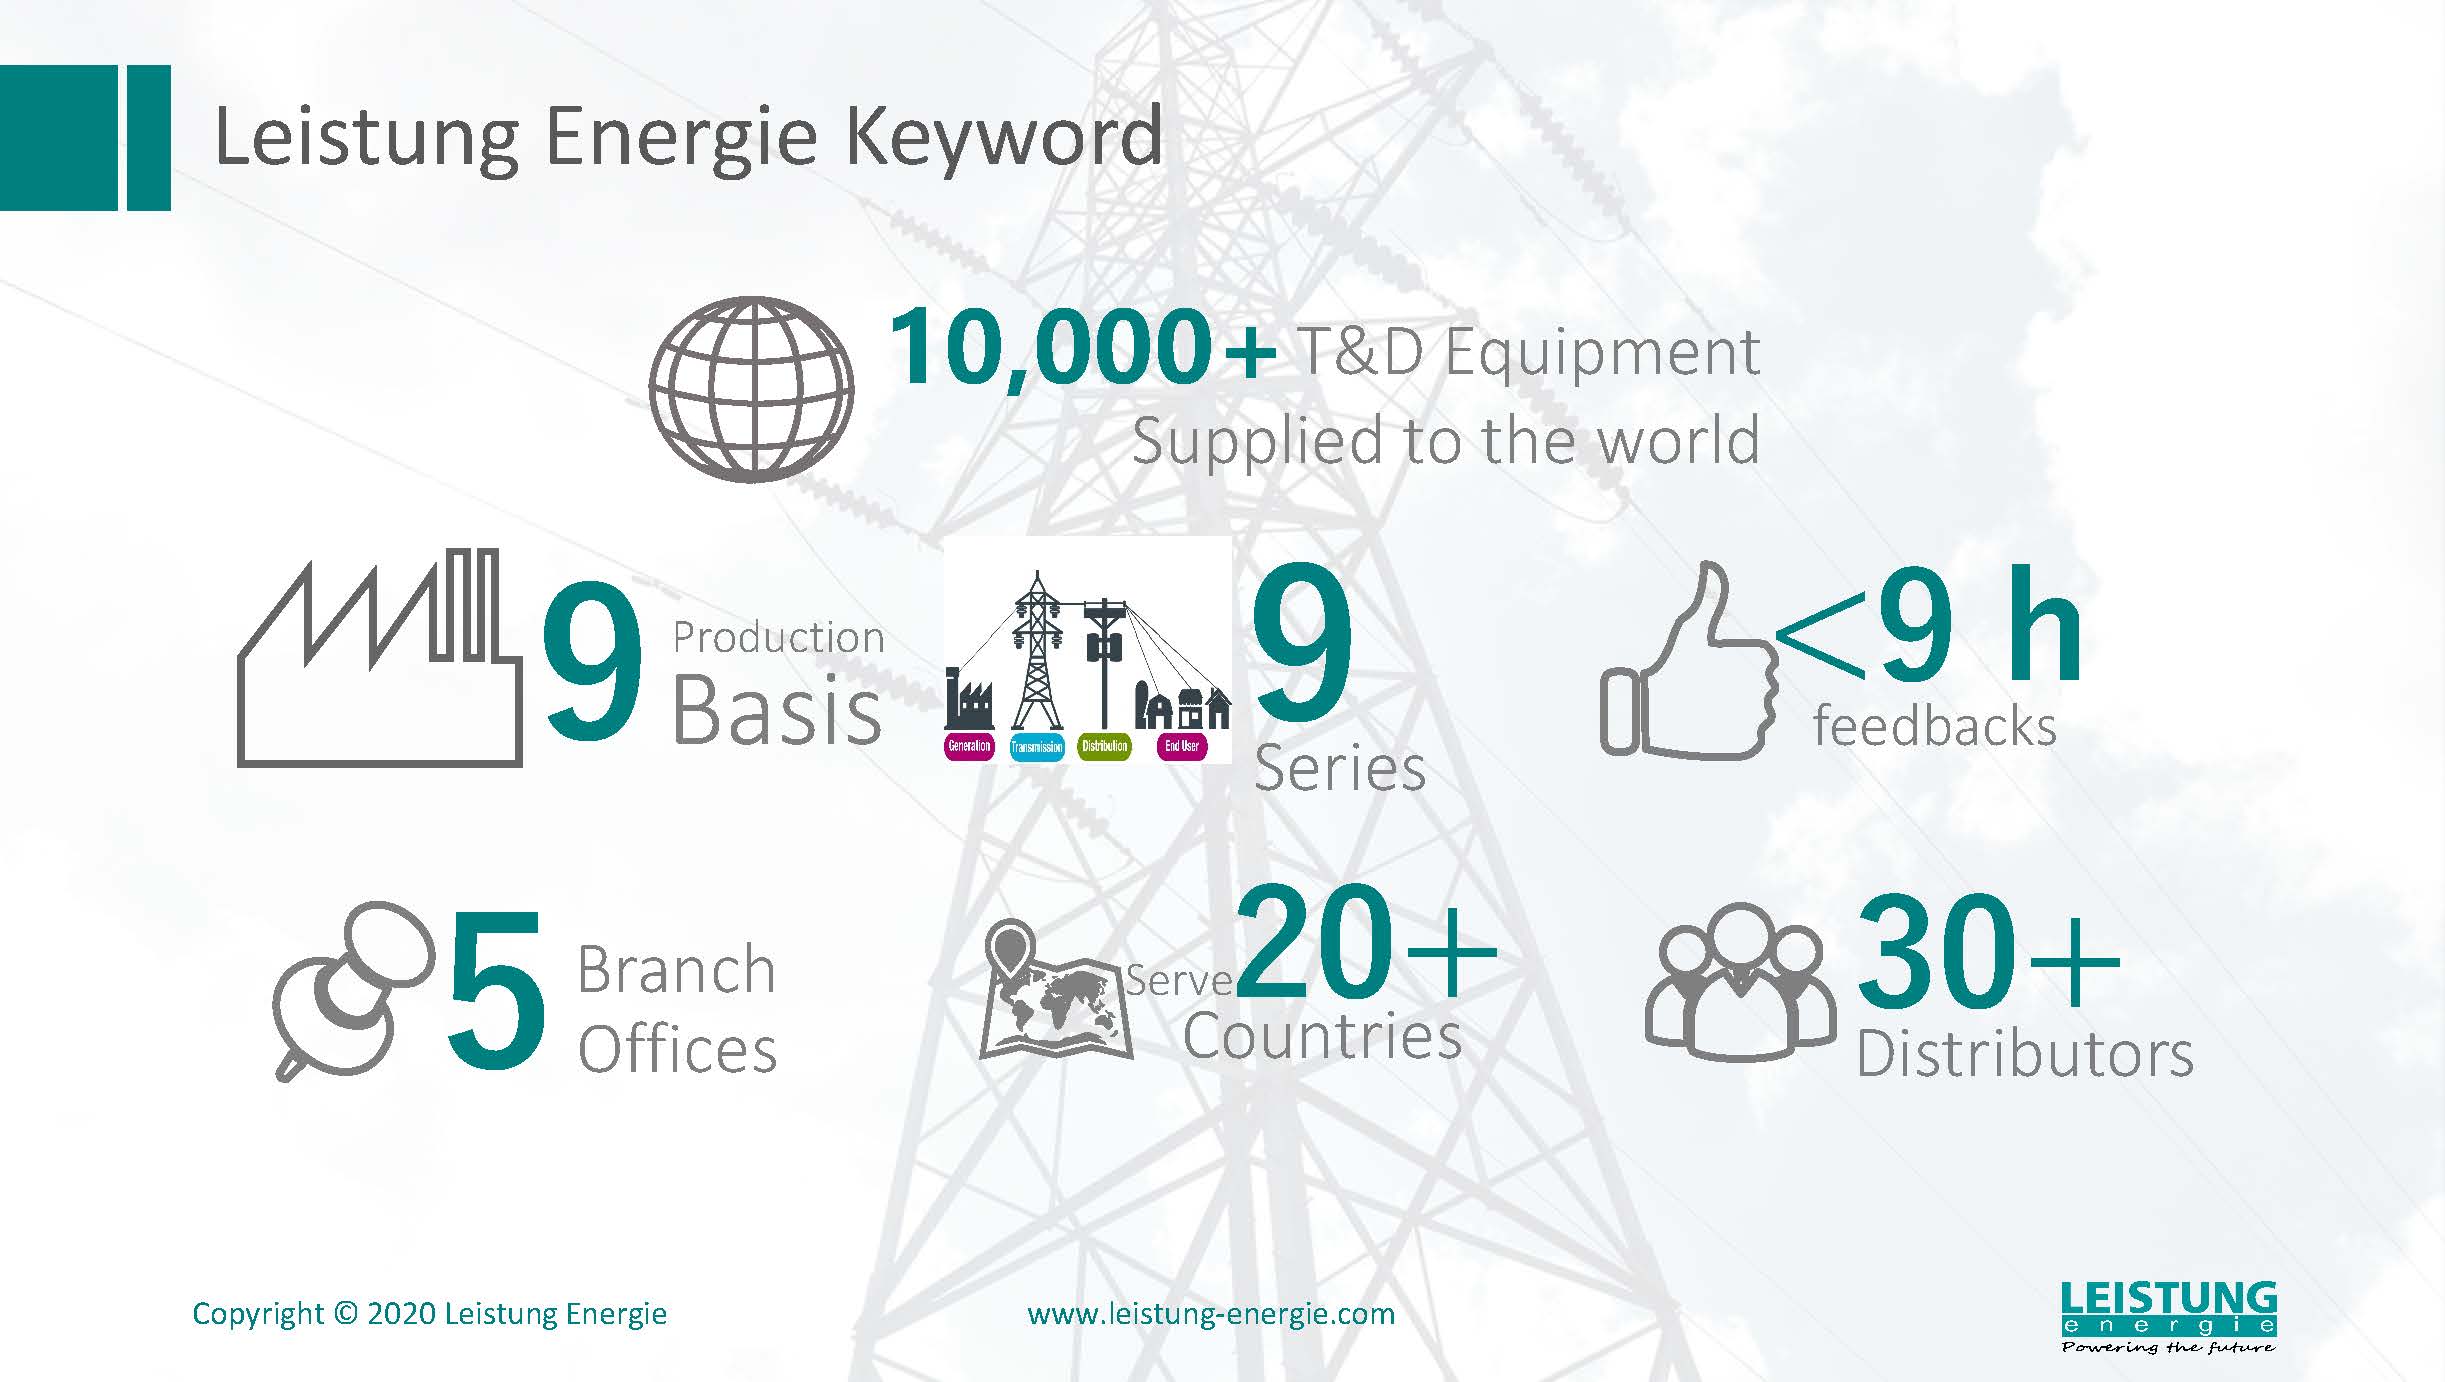 Keywords about Leistung Energie